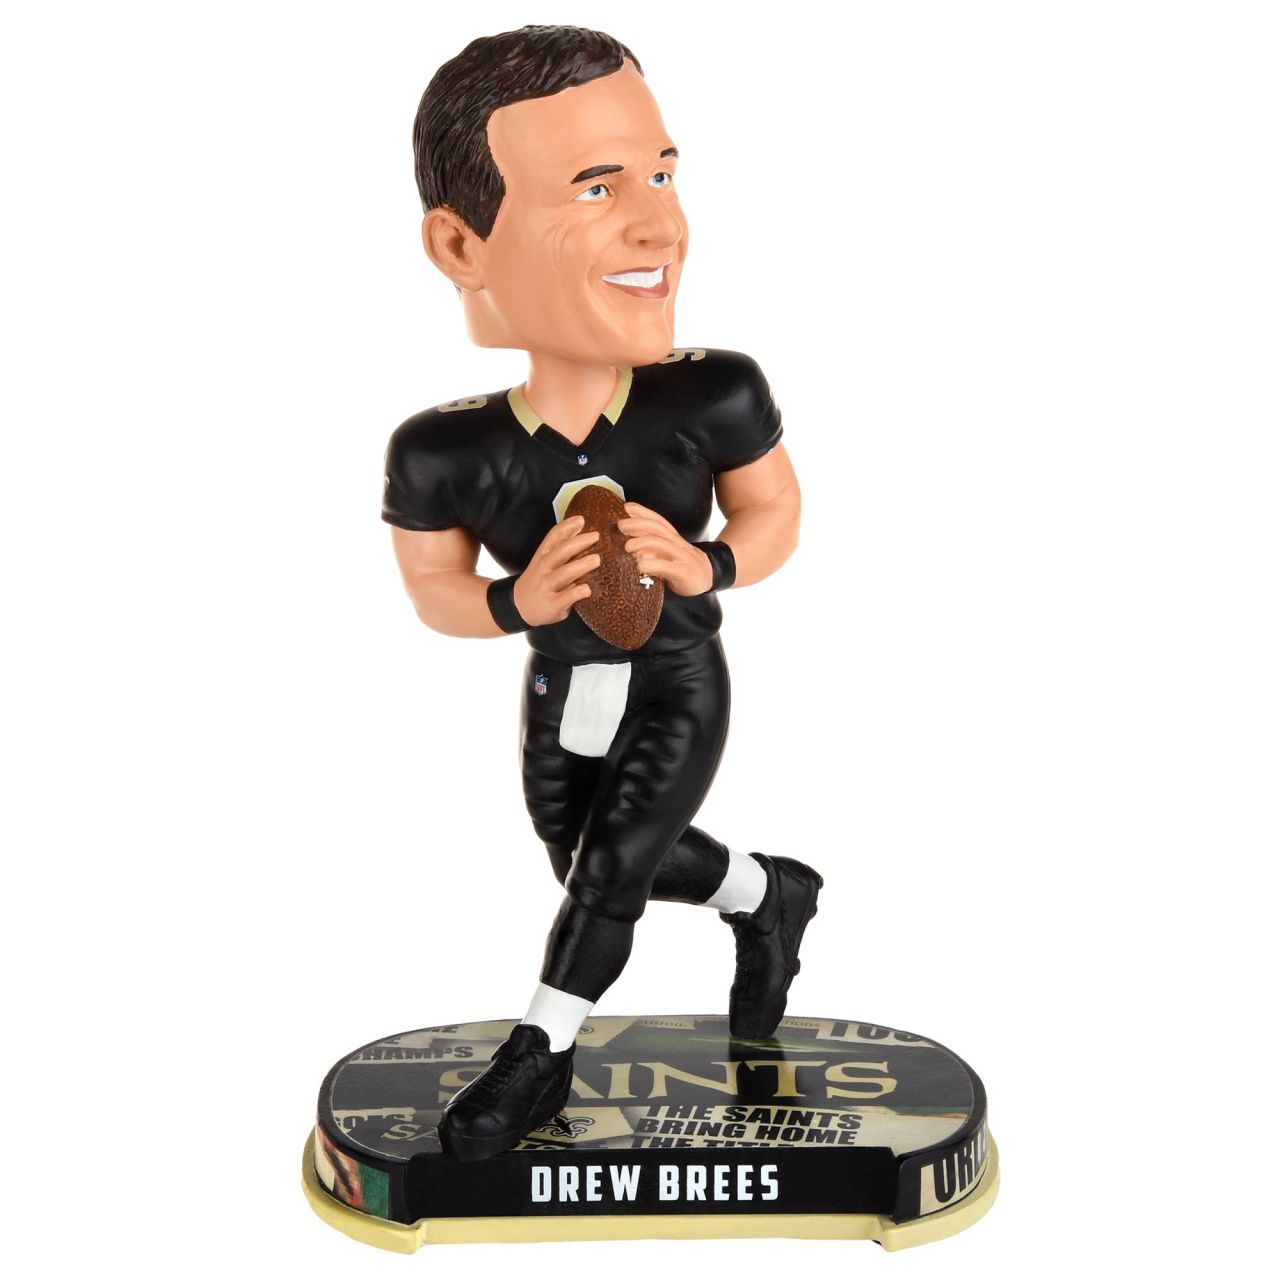 amfoo - Drew Brees #9 Bobblehead NFL New Orleans Saints